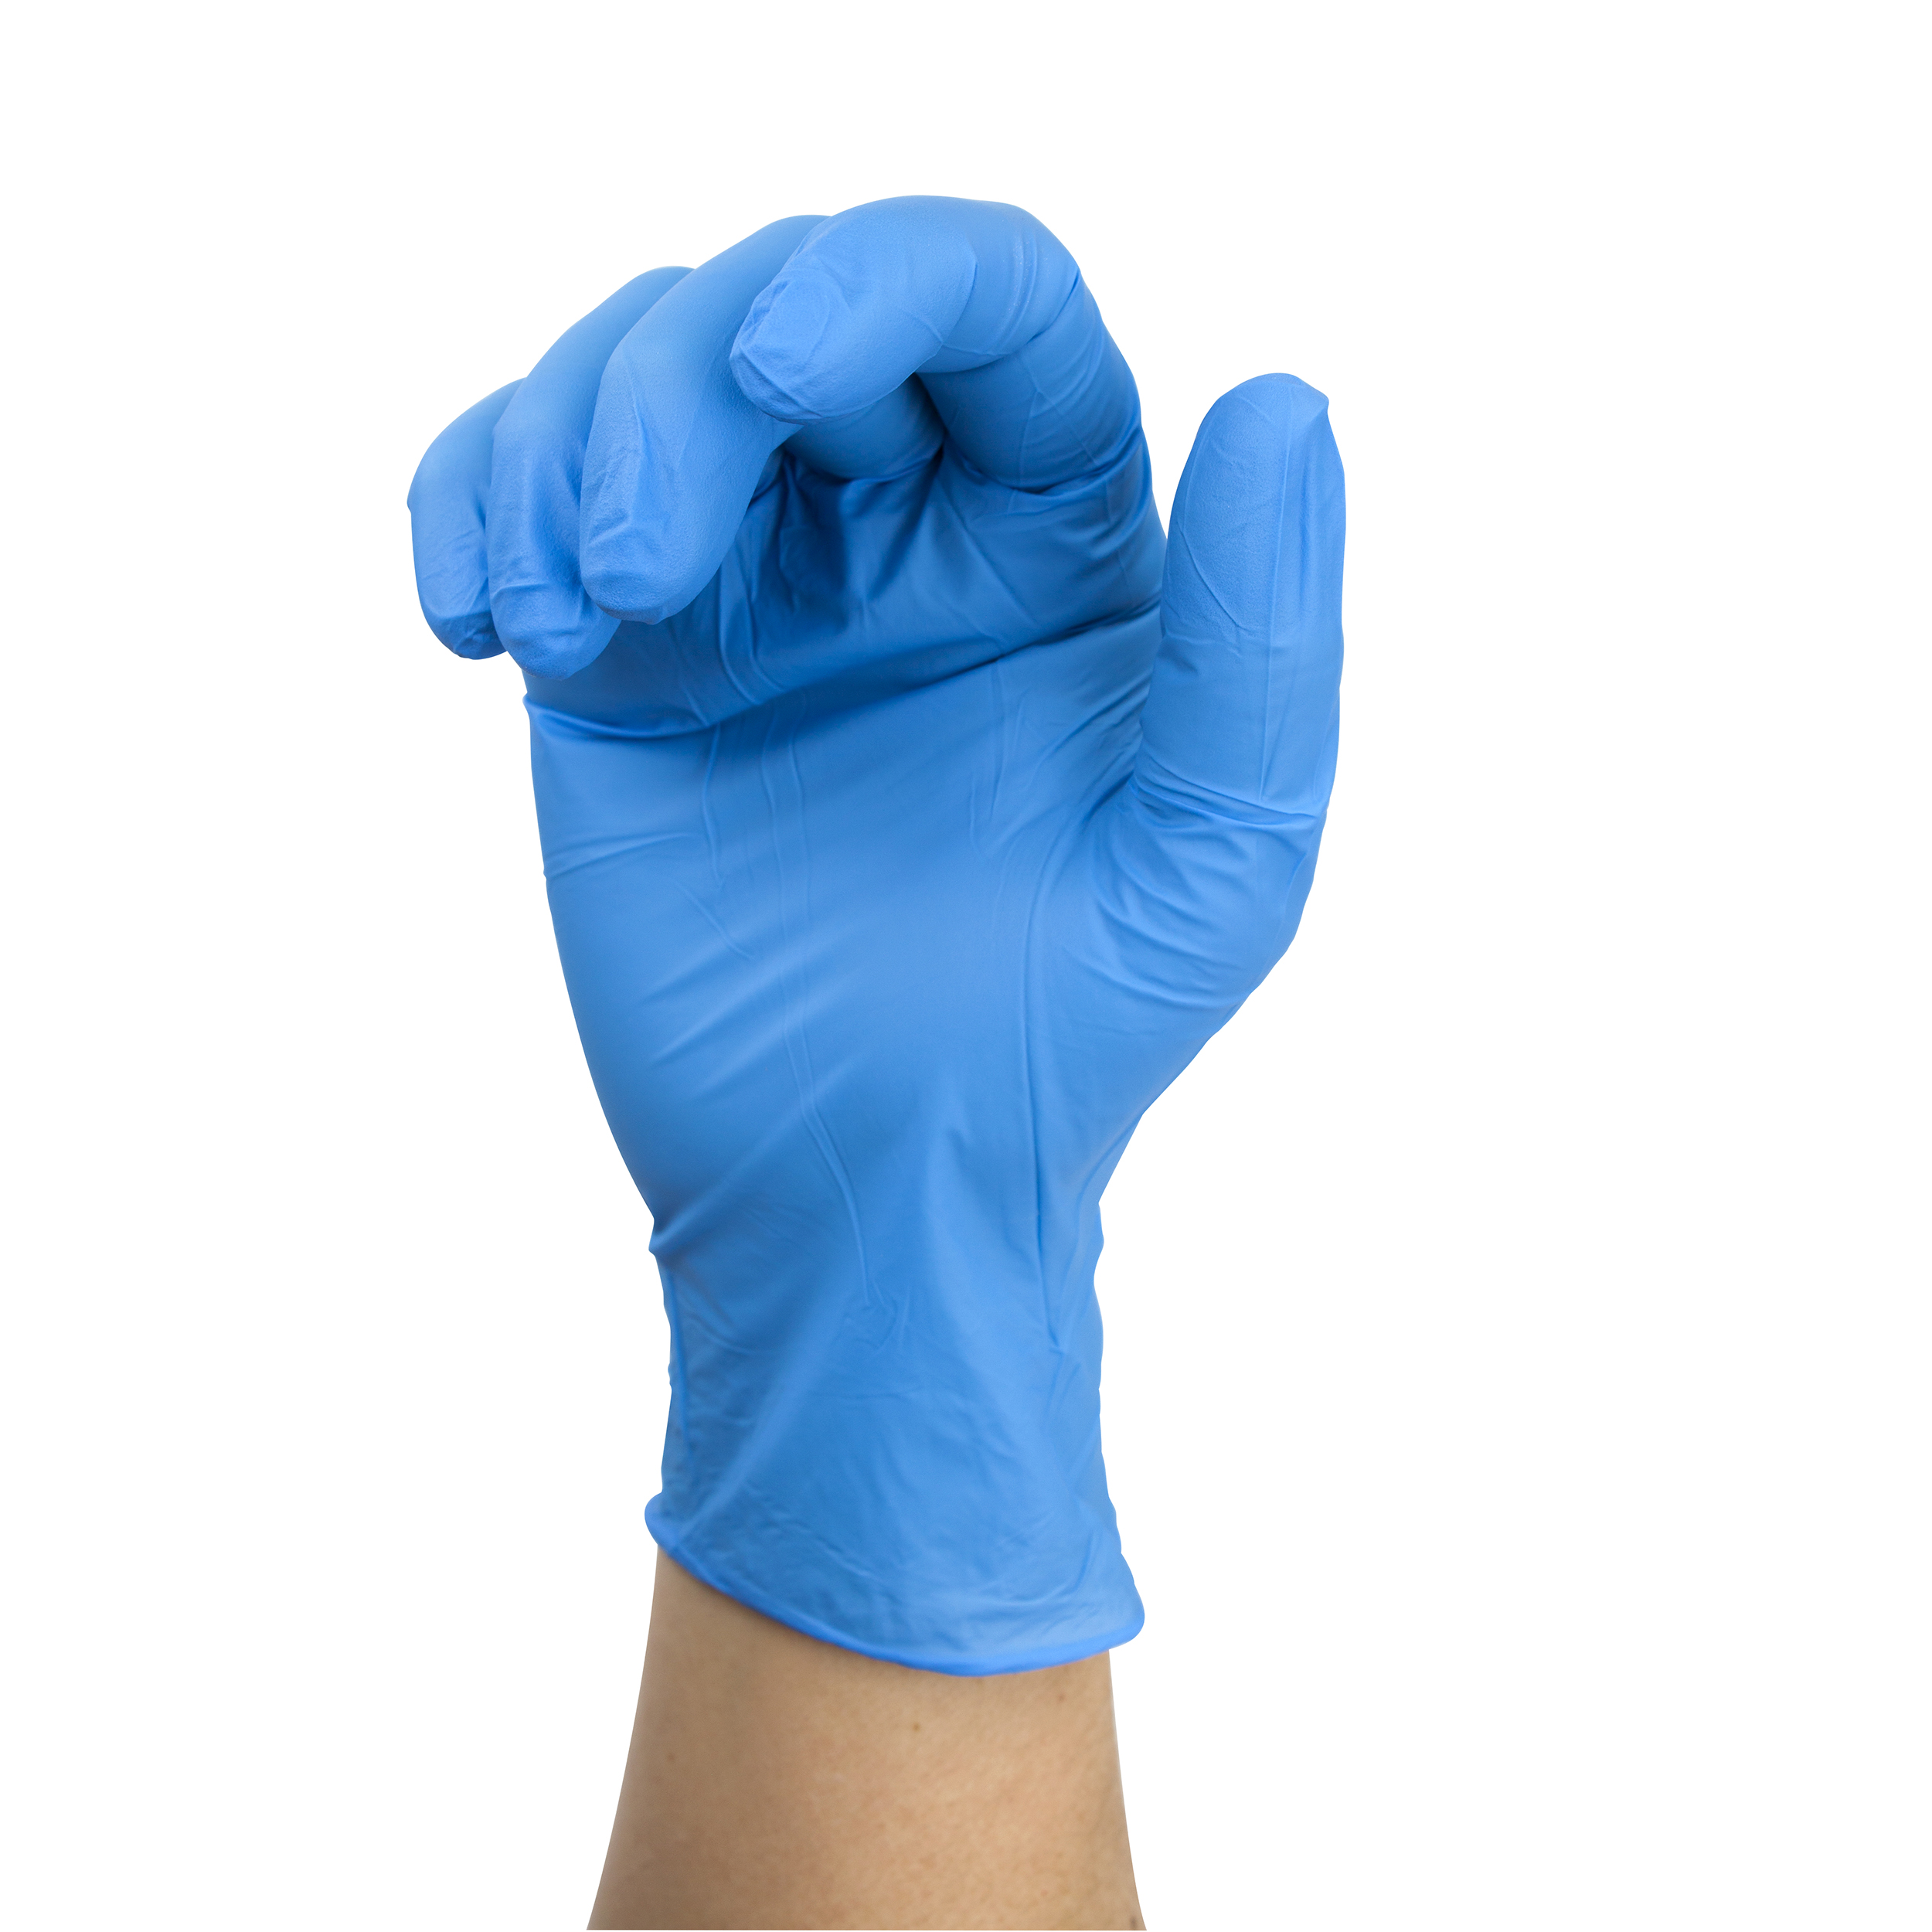 Nitrile Exam Glove (Non-latex) Powder Free - L - Blue - 1000 Pairs